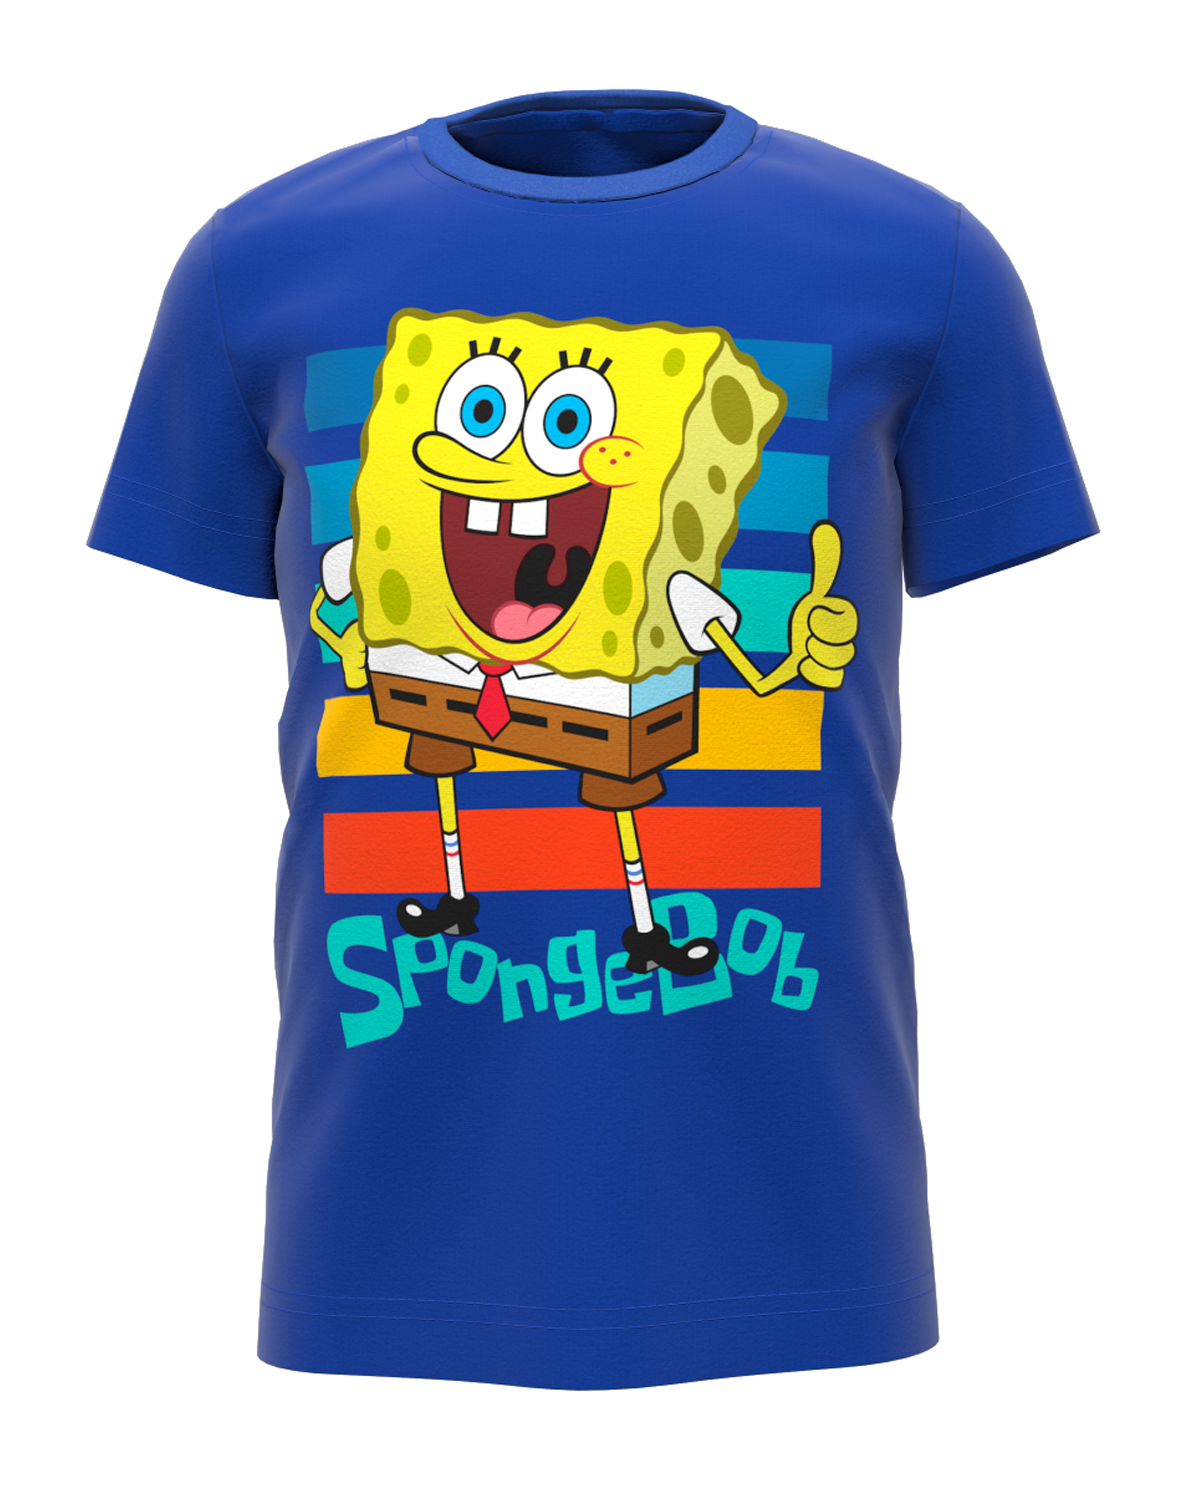 SpongeBob v kalhotách - licence Chlapecké tričko - SpongeBob v kalhotách 5202209, modrá Barva: Modrá, Velikost: 110